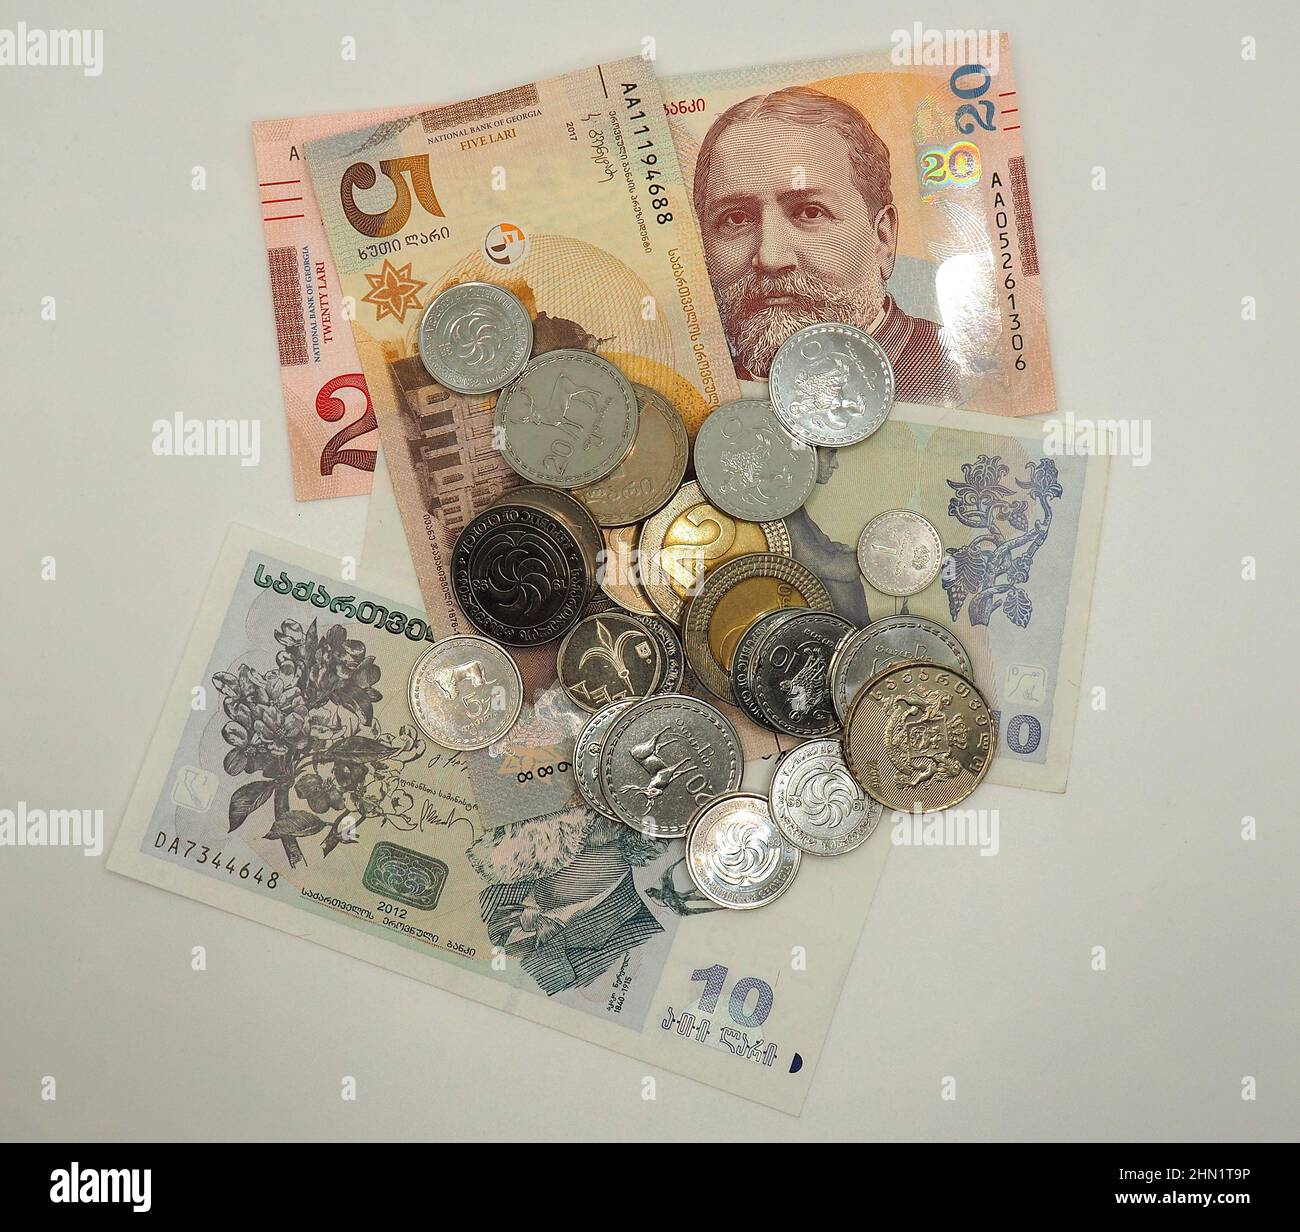 lari coins and banknotes, Georgian lari (GEL), Georgia, Europe Stock Photo